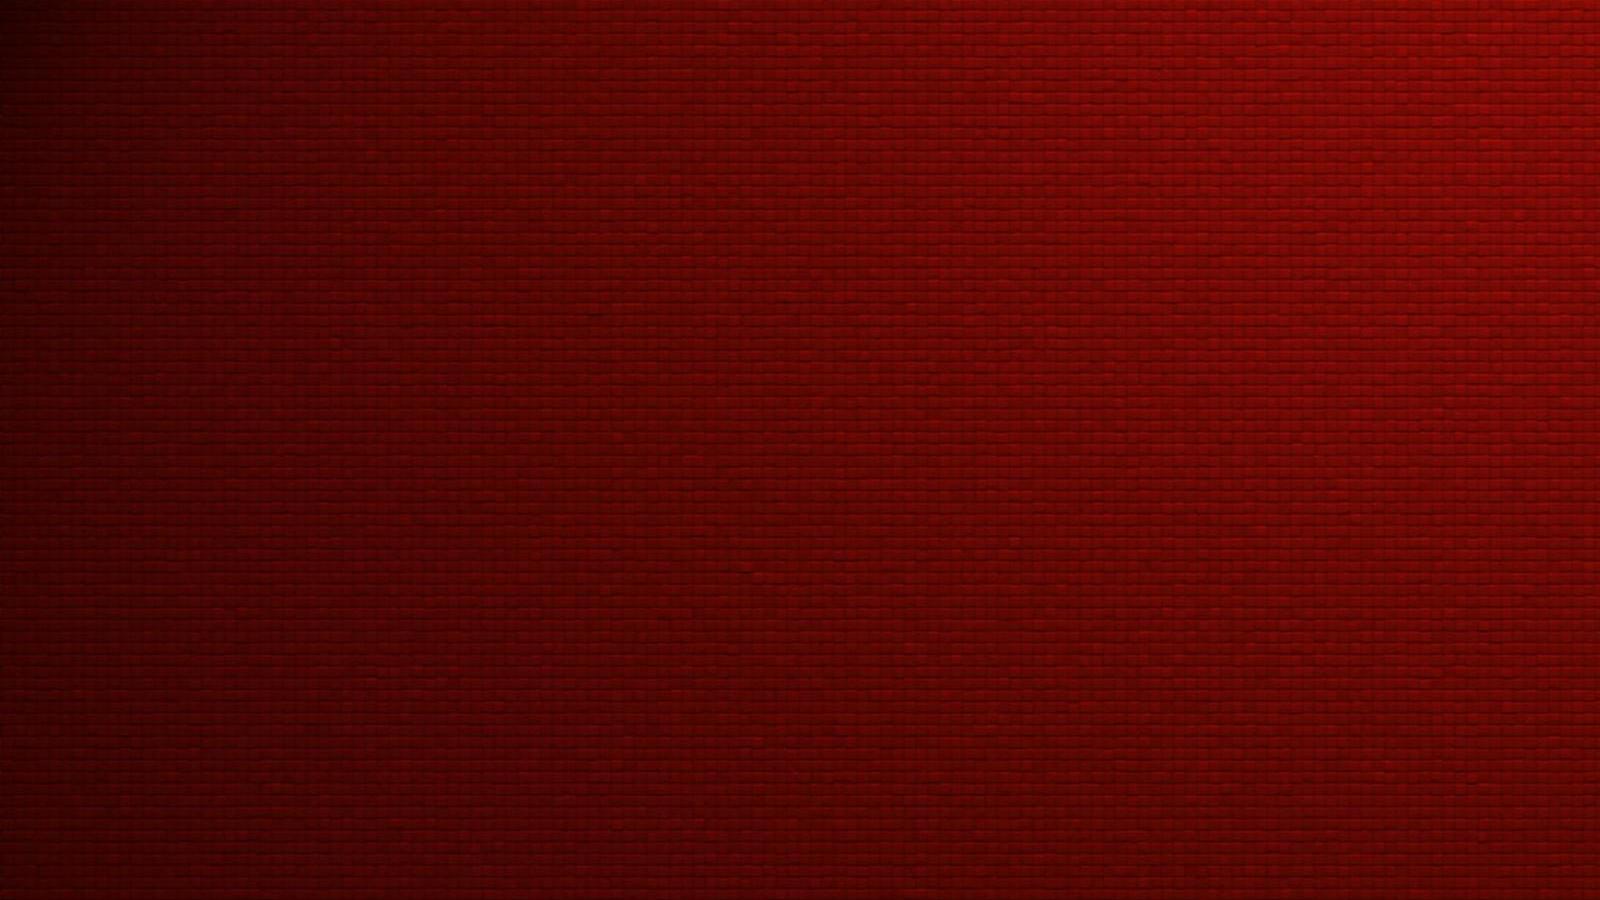 Download 1600x900 Red Desktop Wallpaper Abstract Red Wallpaper 1600x900